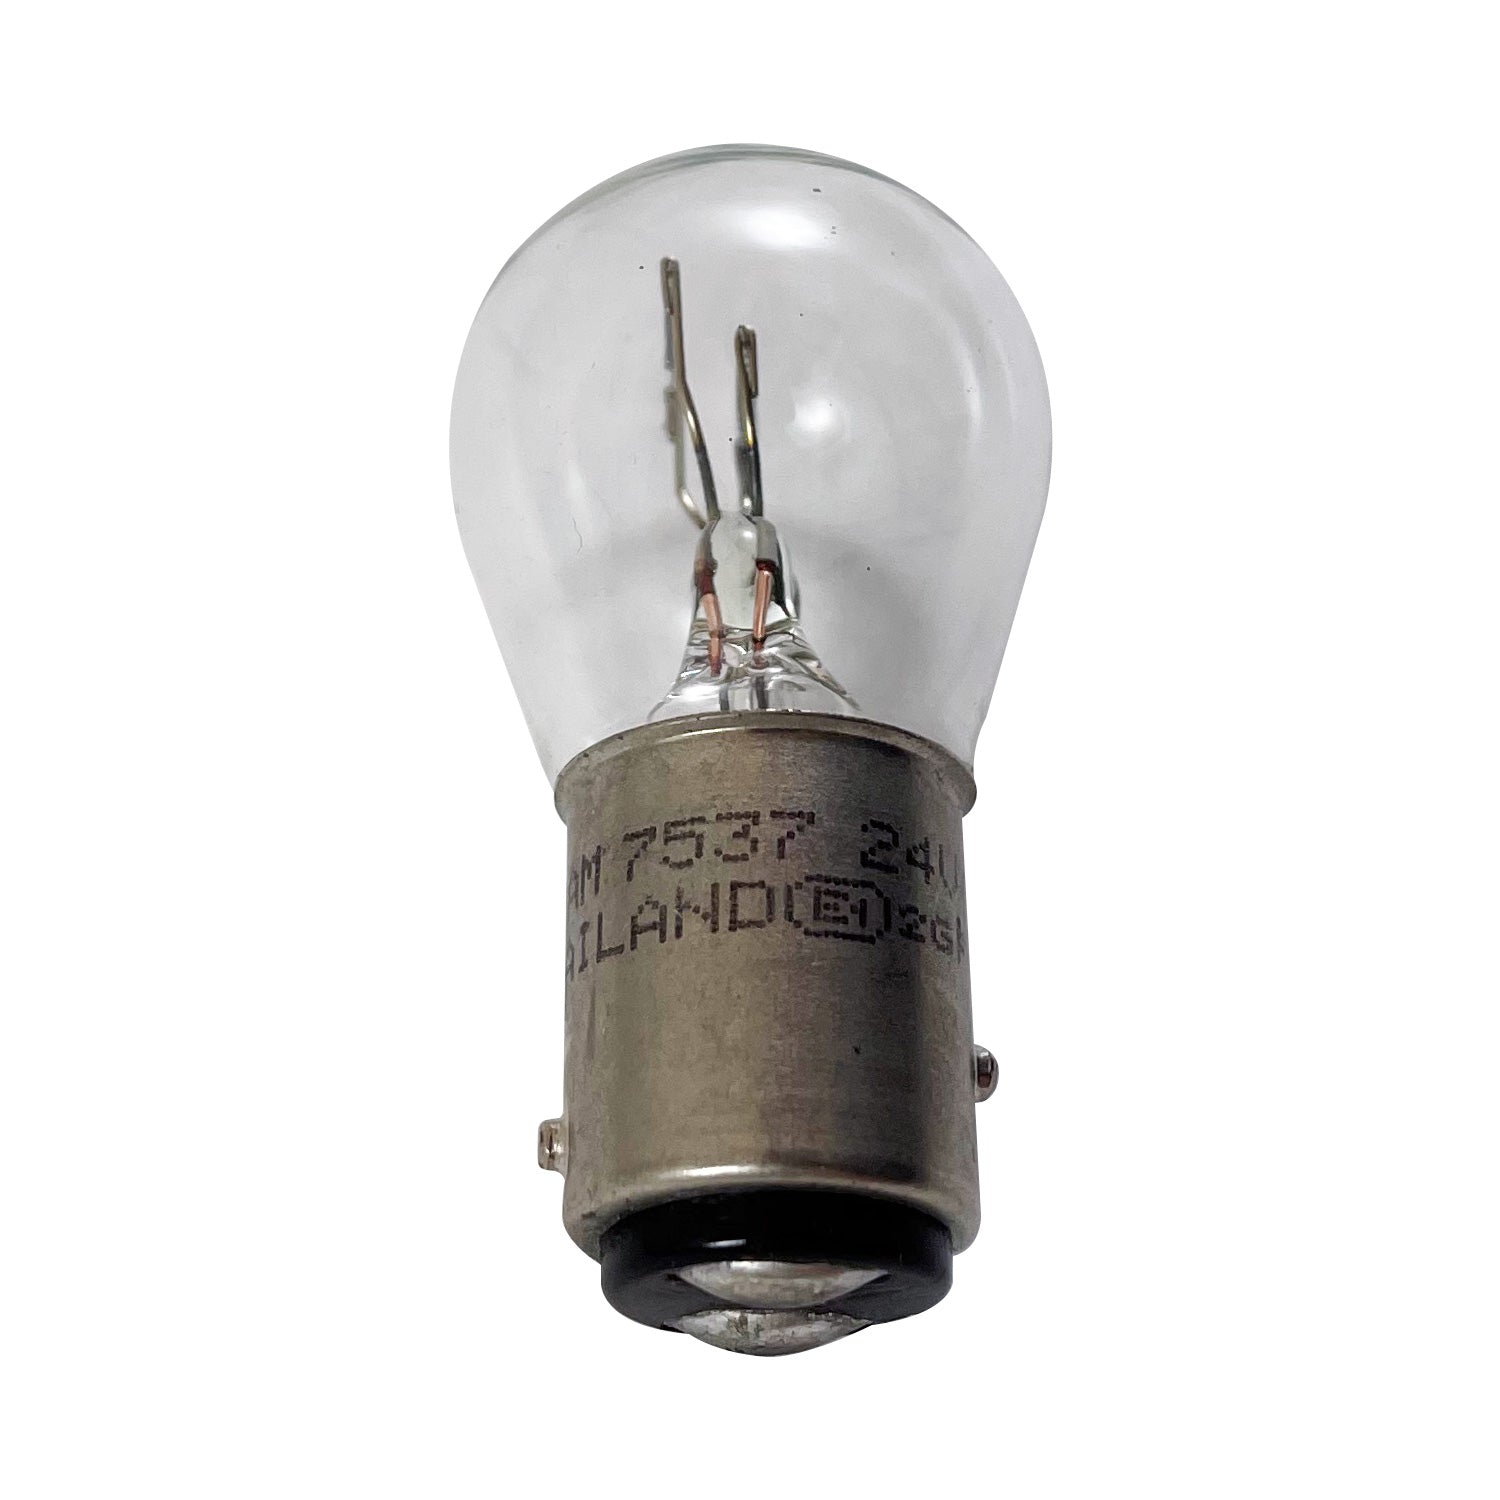 APPROVED VENDOR Incandescent Bulb,24V 5W,PK10: For 22UU01/22UU03/22UU05, 10  PK